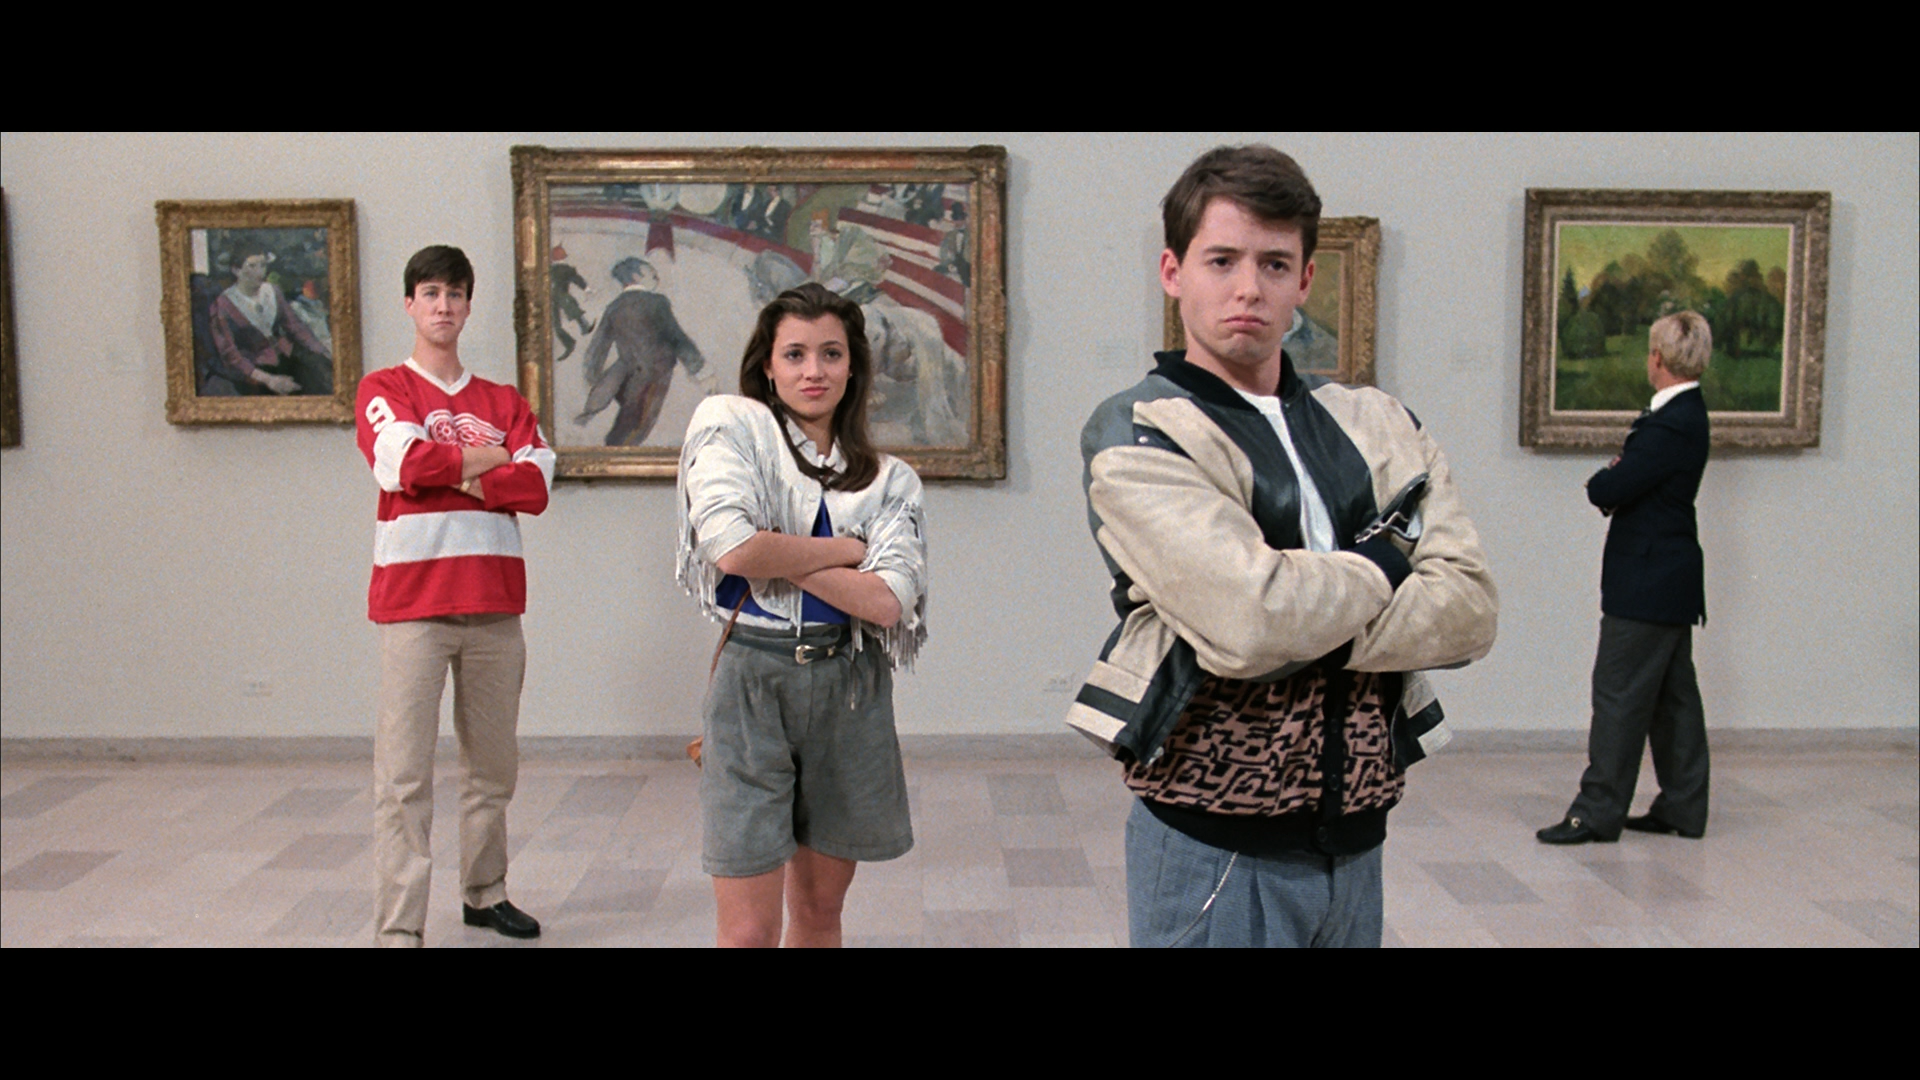 34+] Ferris Bueller's Day Off Wallpapers - WallpaperSafari